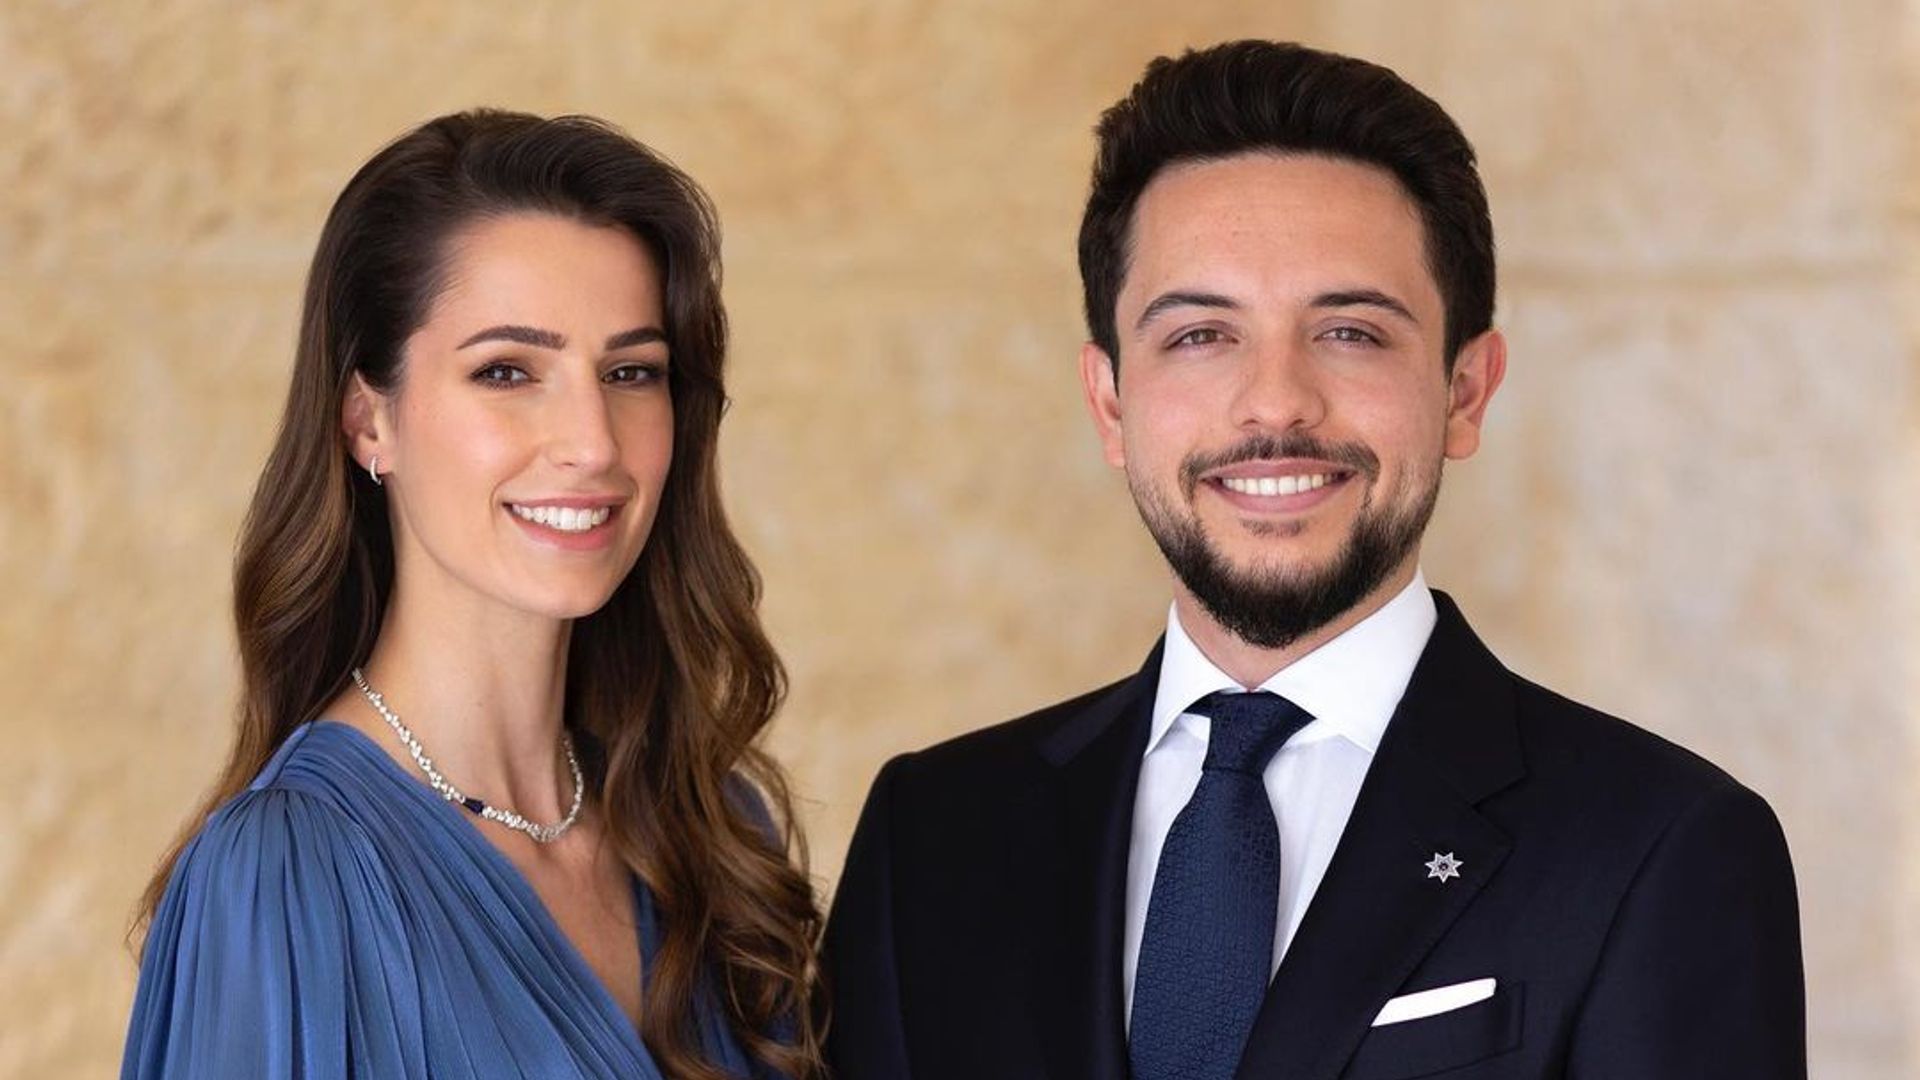 The Crown Prince of Jordan and Rajwa Al Saif will marry next month